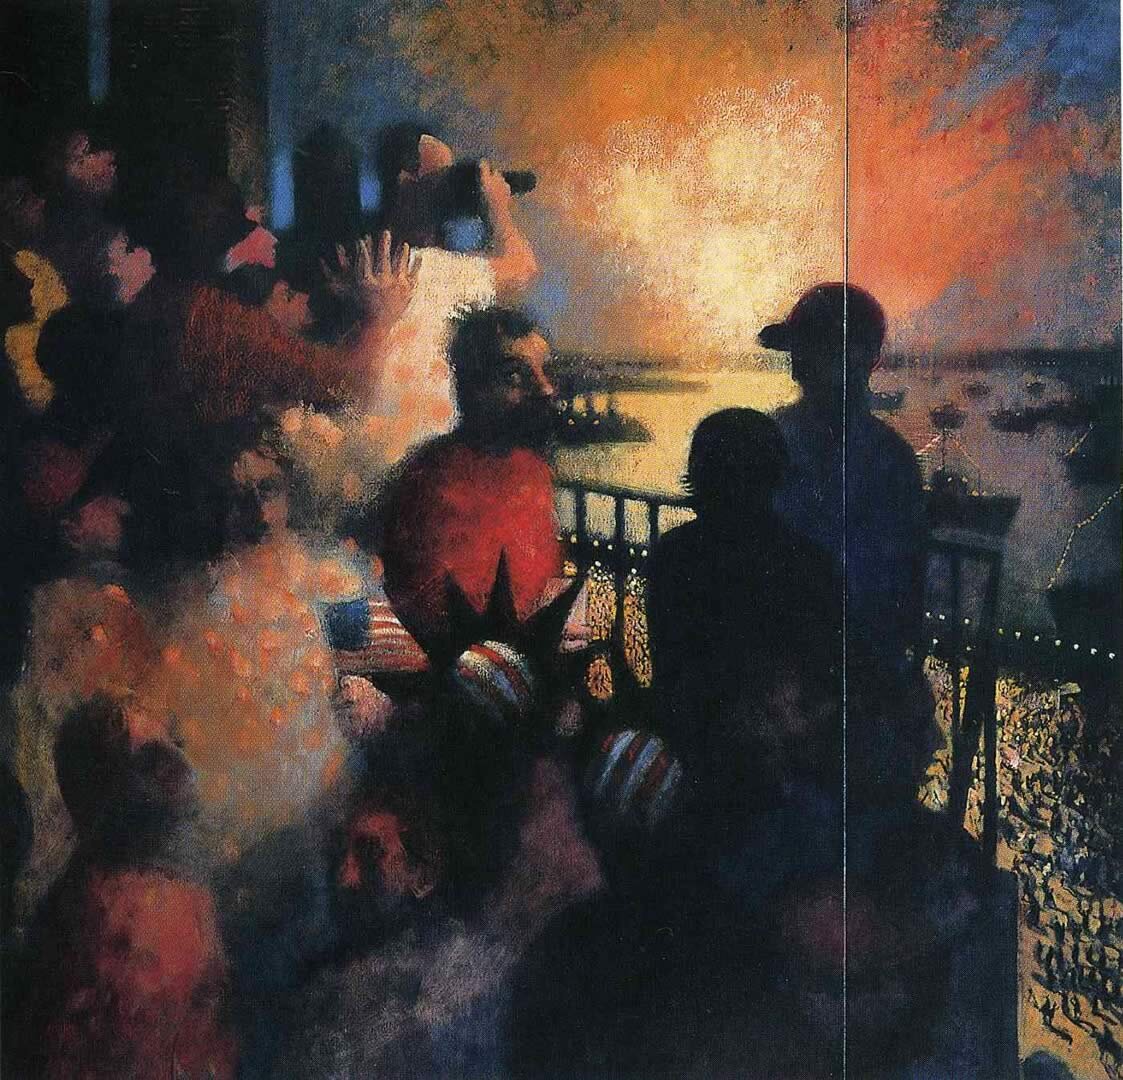 On the Balcony (1986)